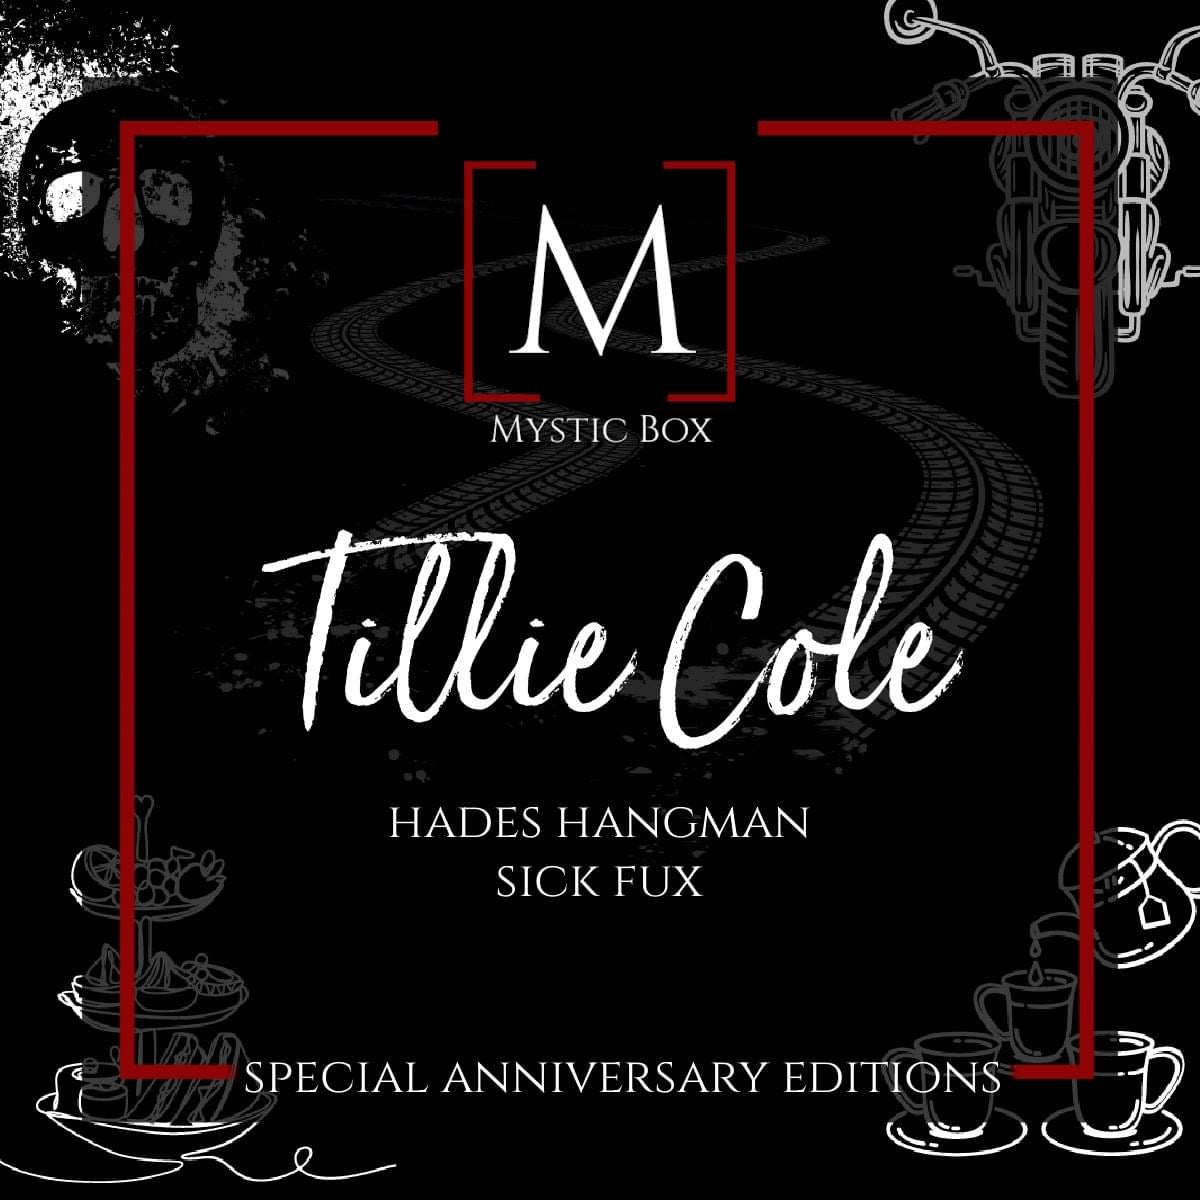 Hades Hangman Book 2 & 3 by Tillie Cole